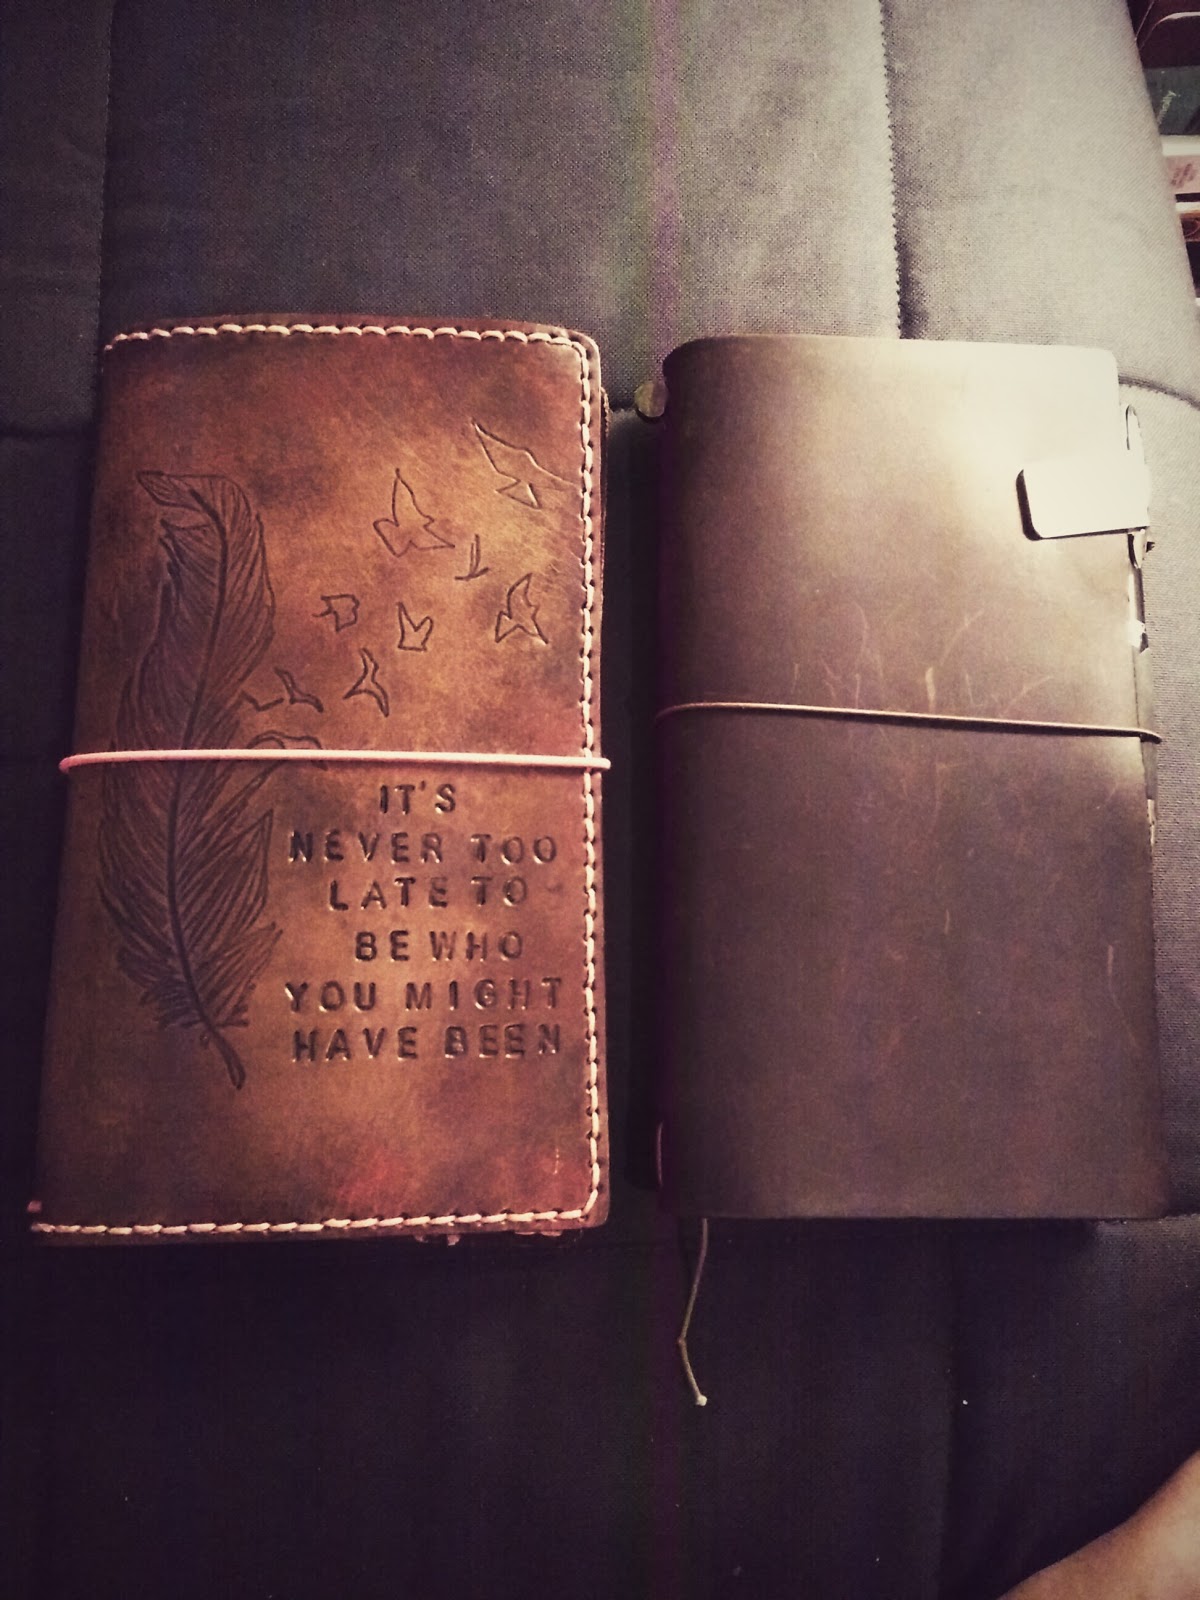 travelers notebook